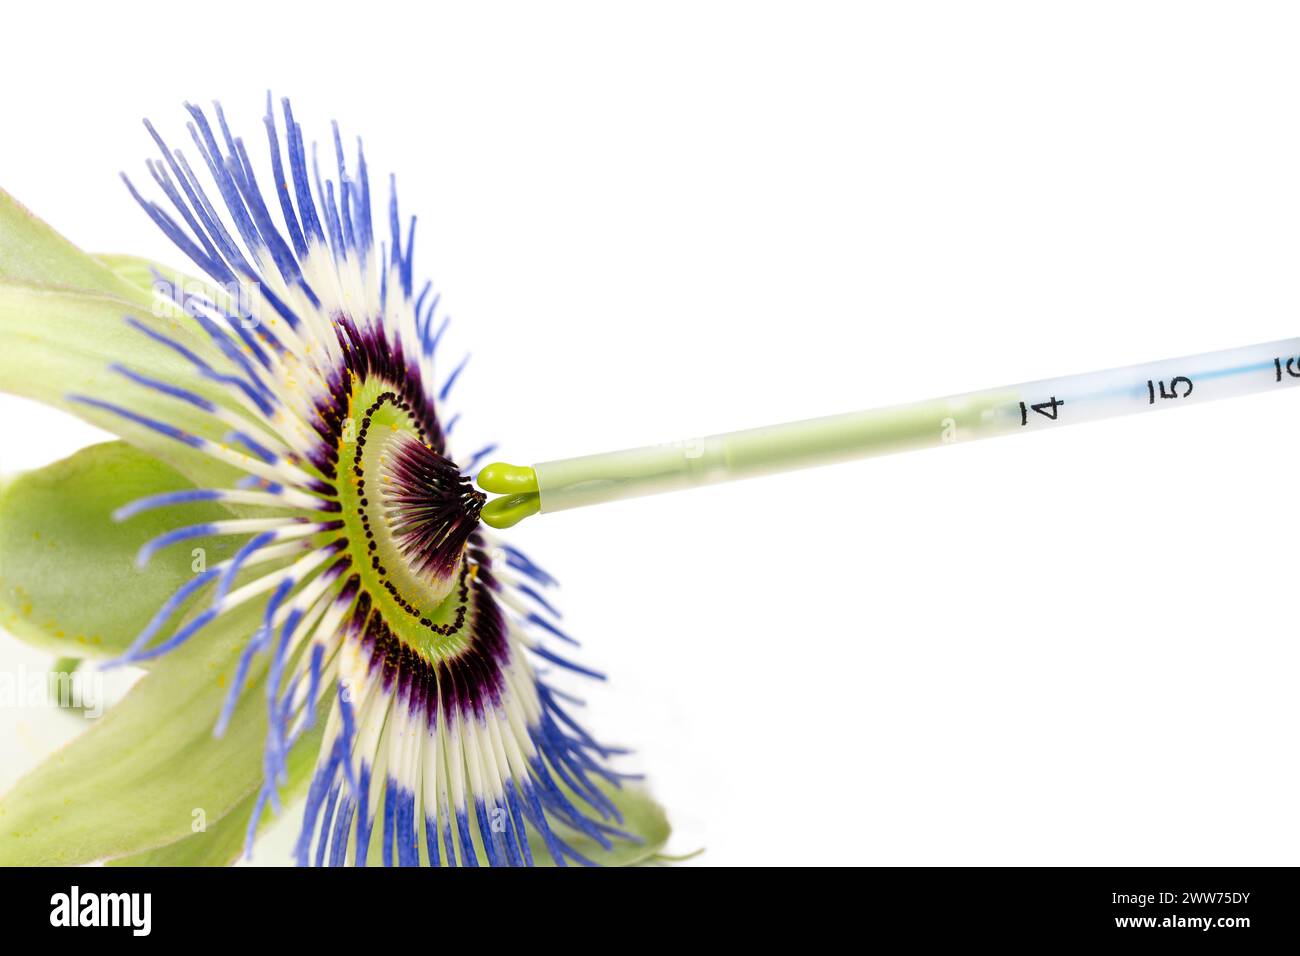 IUD penetrating a Passionflower flower symbolizing the uterus. Stock Photo